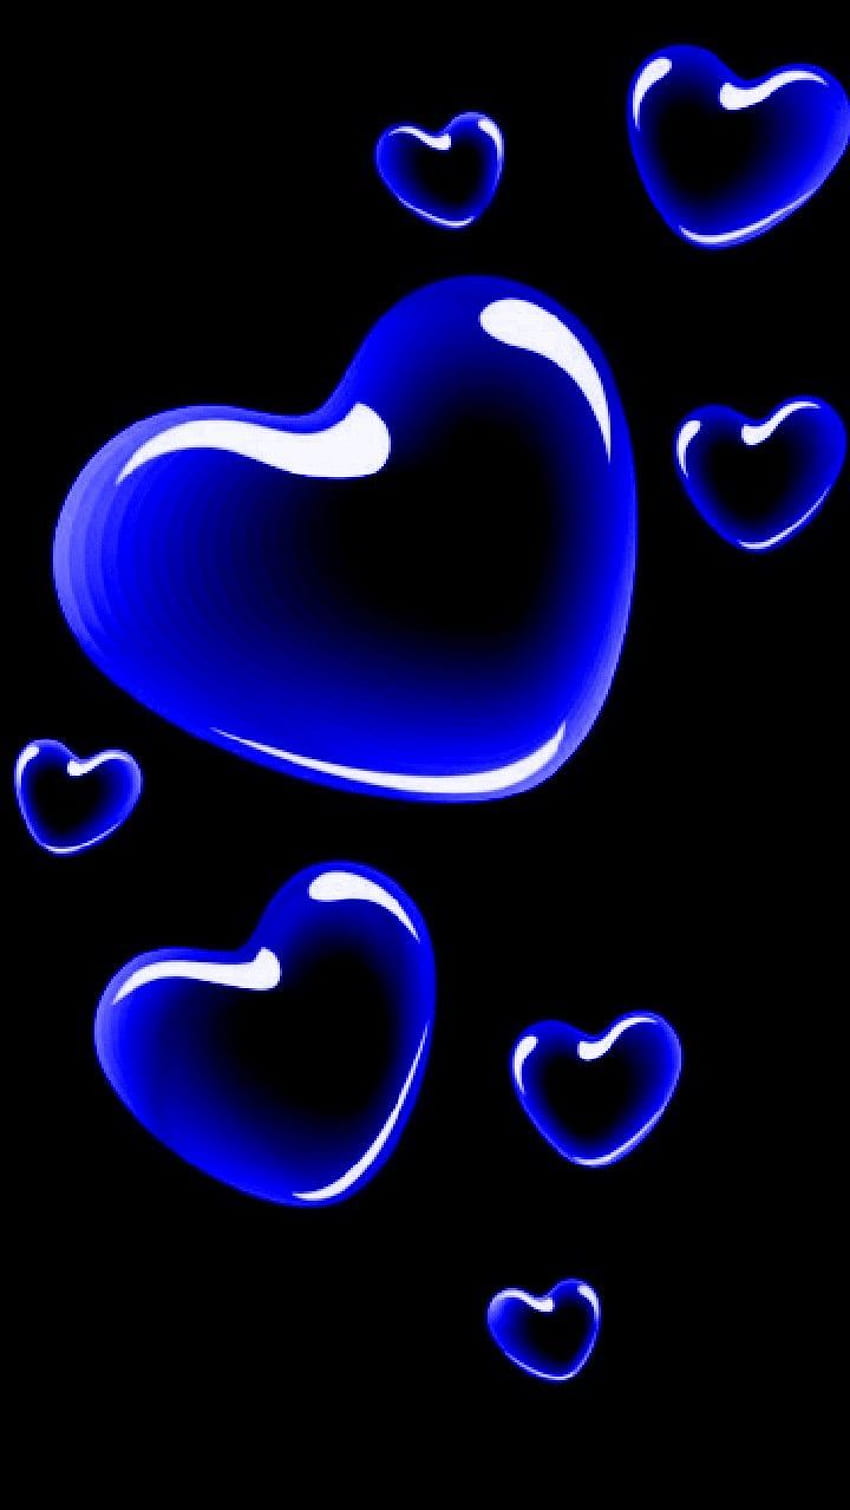 Black and Blue Heart - , Black and Blue Heart Background on Bat ...